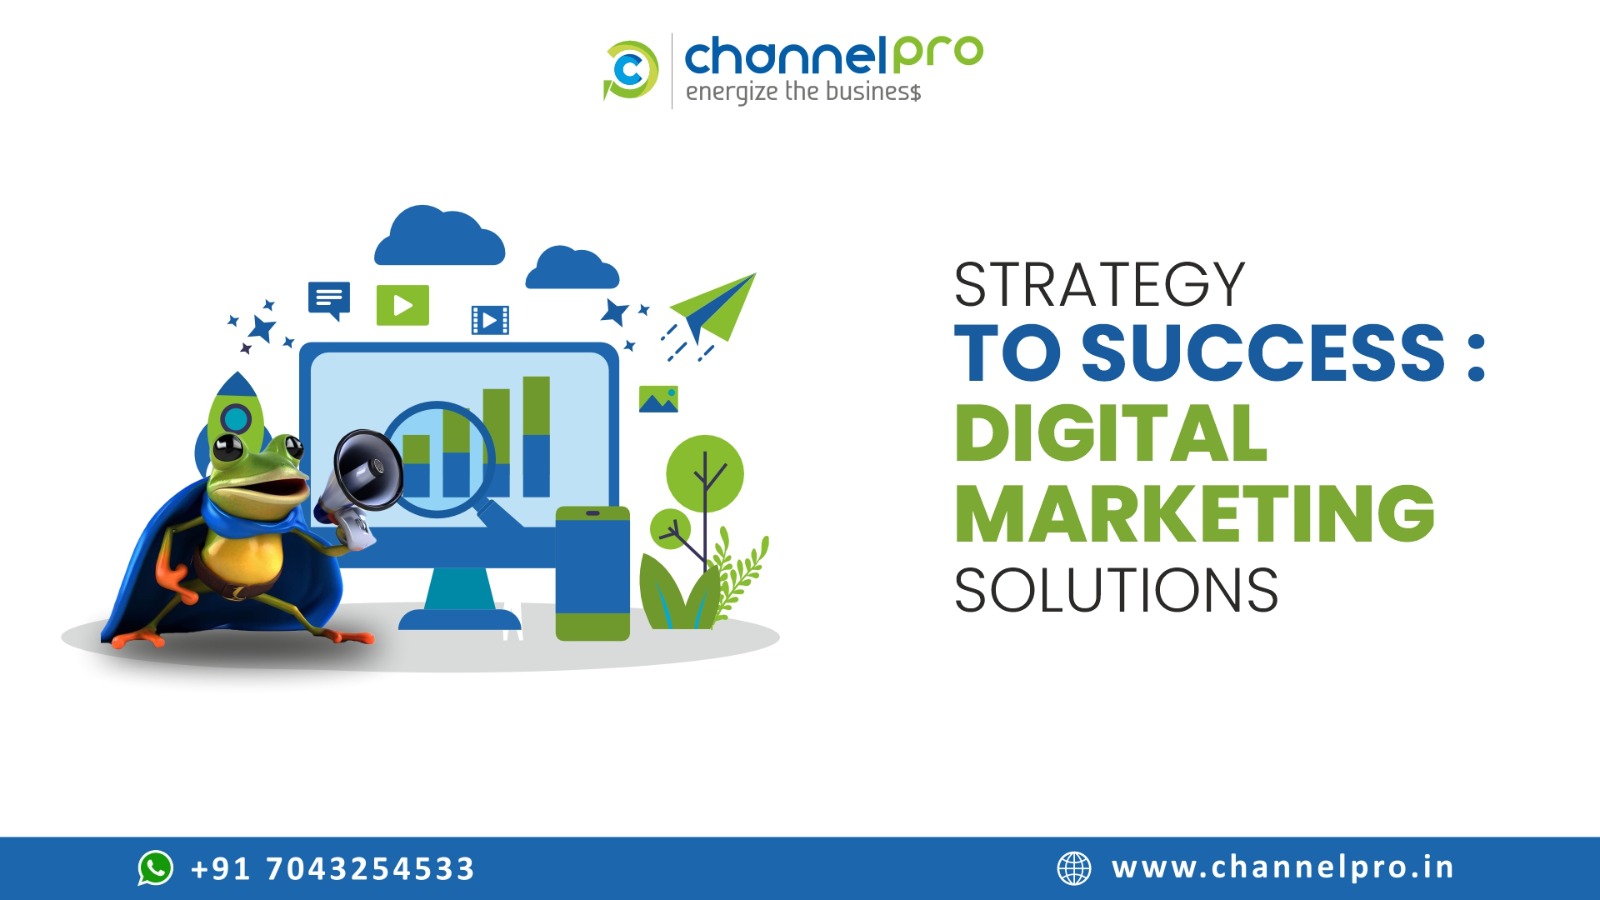 ChannelPro Communications' Digital Marketing Solutions